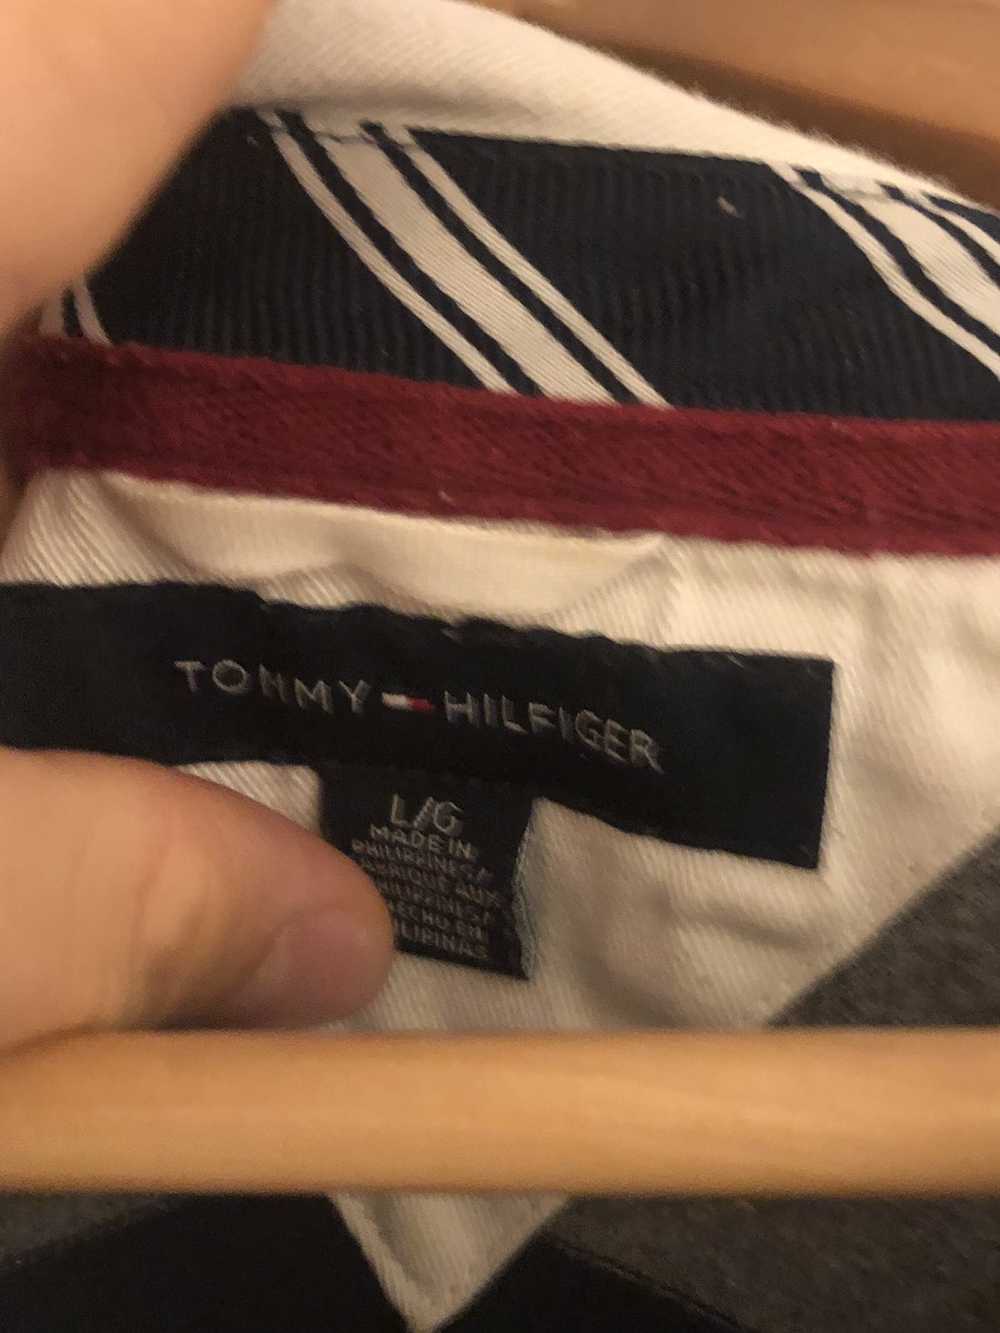 Tommy Hilfiger Tommy Hilfiger Striped Rugby Shirt - image 4